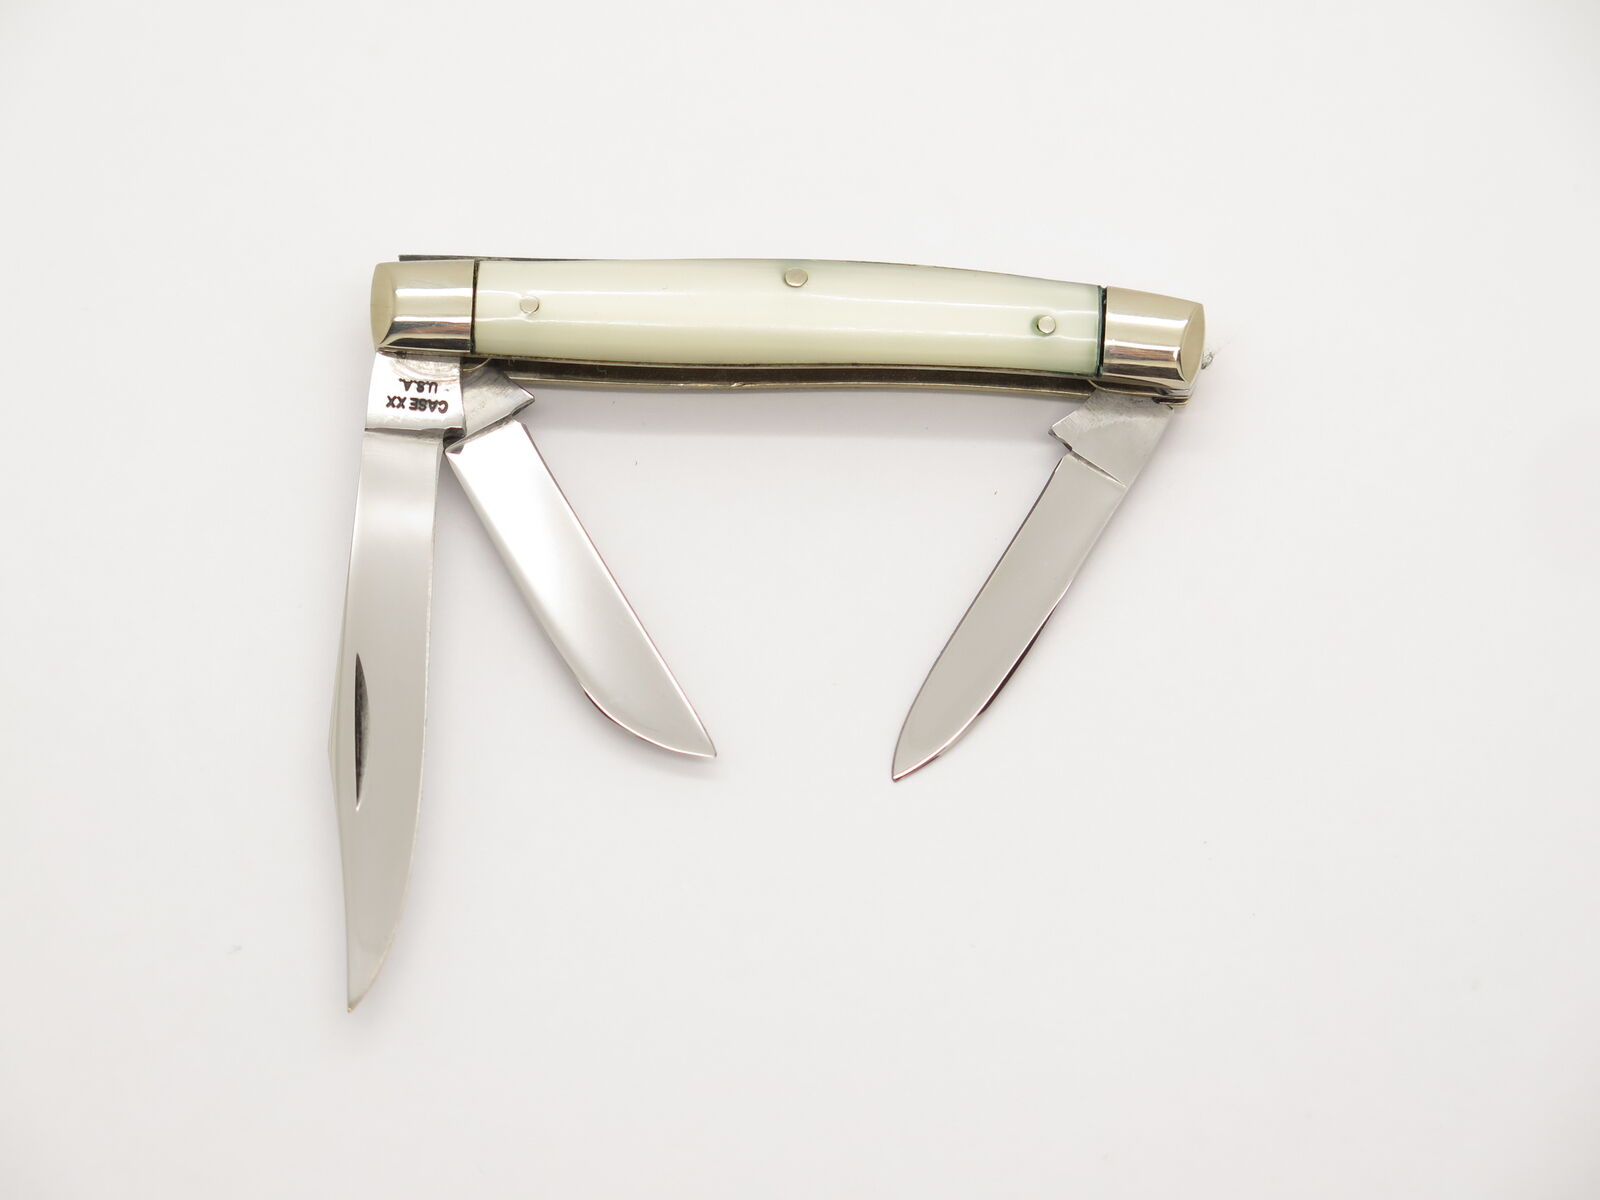 Vintage 1965-69 Case XX 9333 USA Small Stockman Faux Pearl Folding Pocket Knife